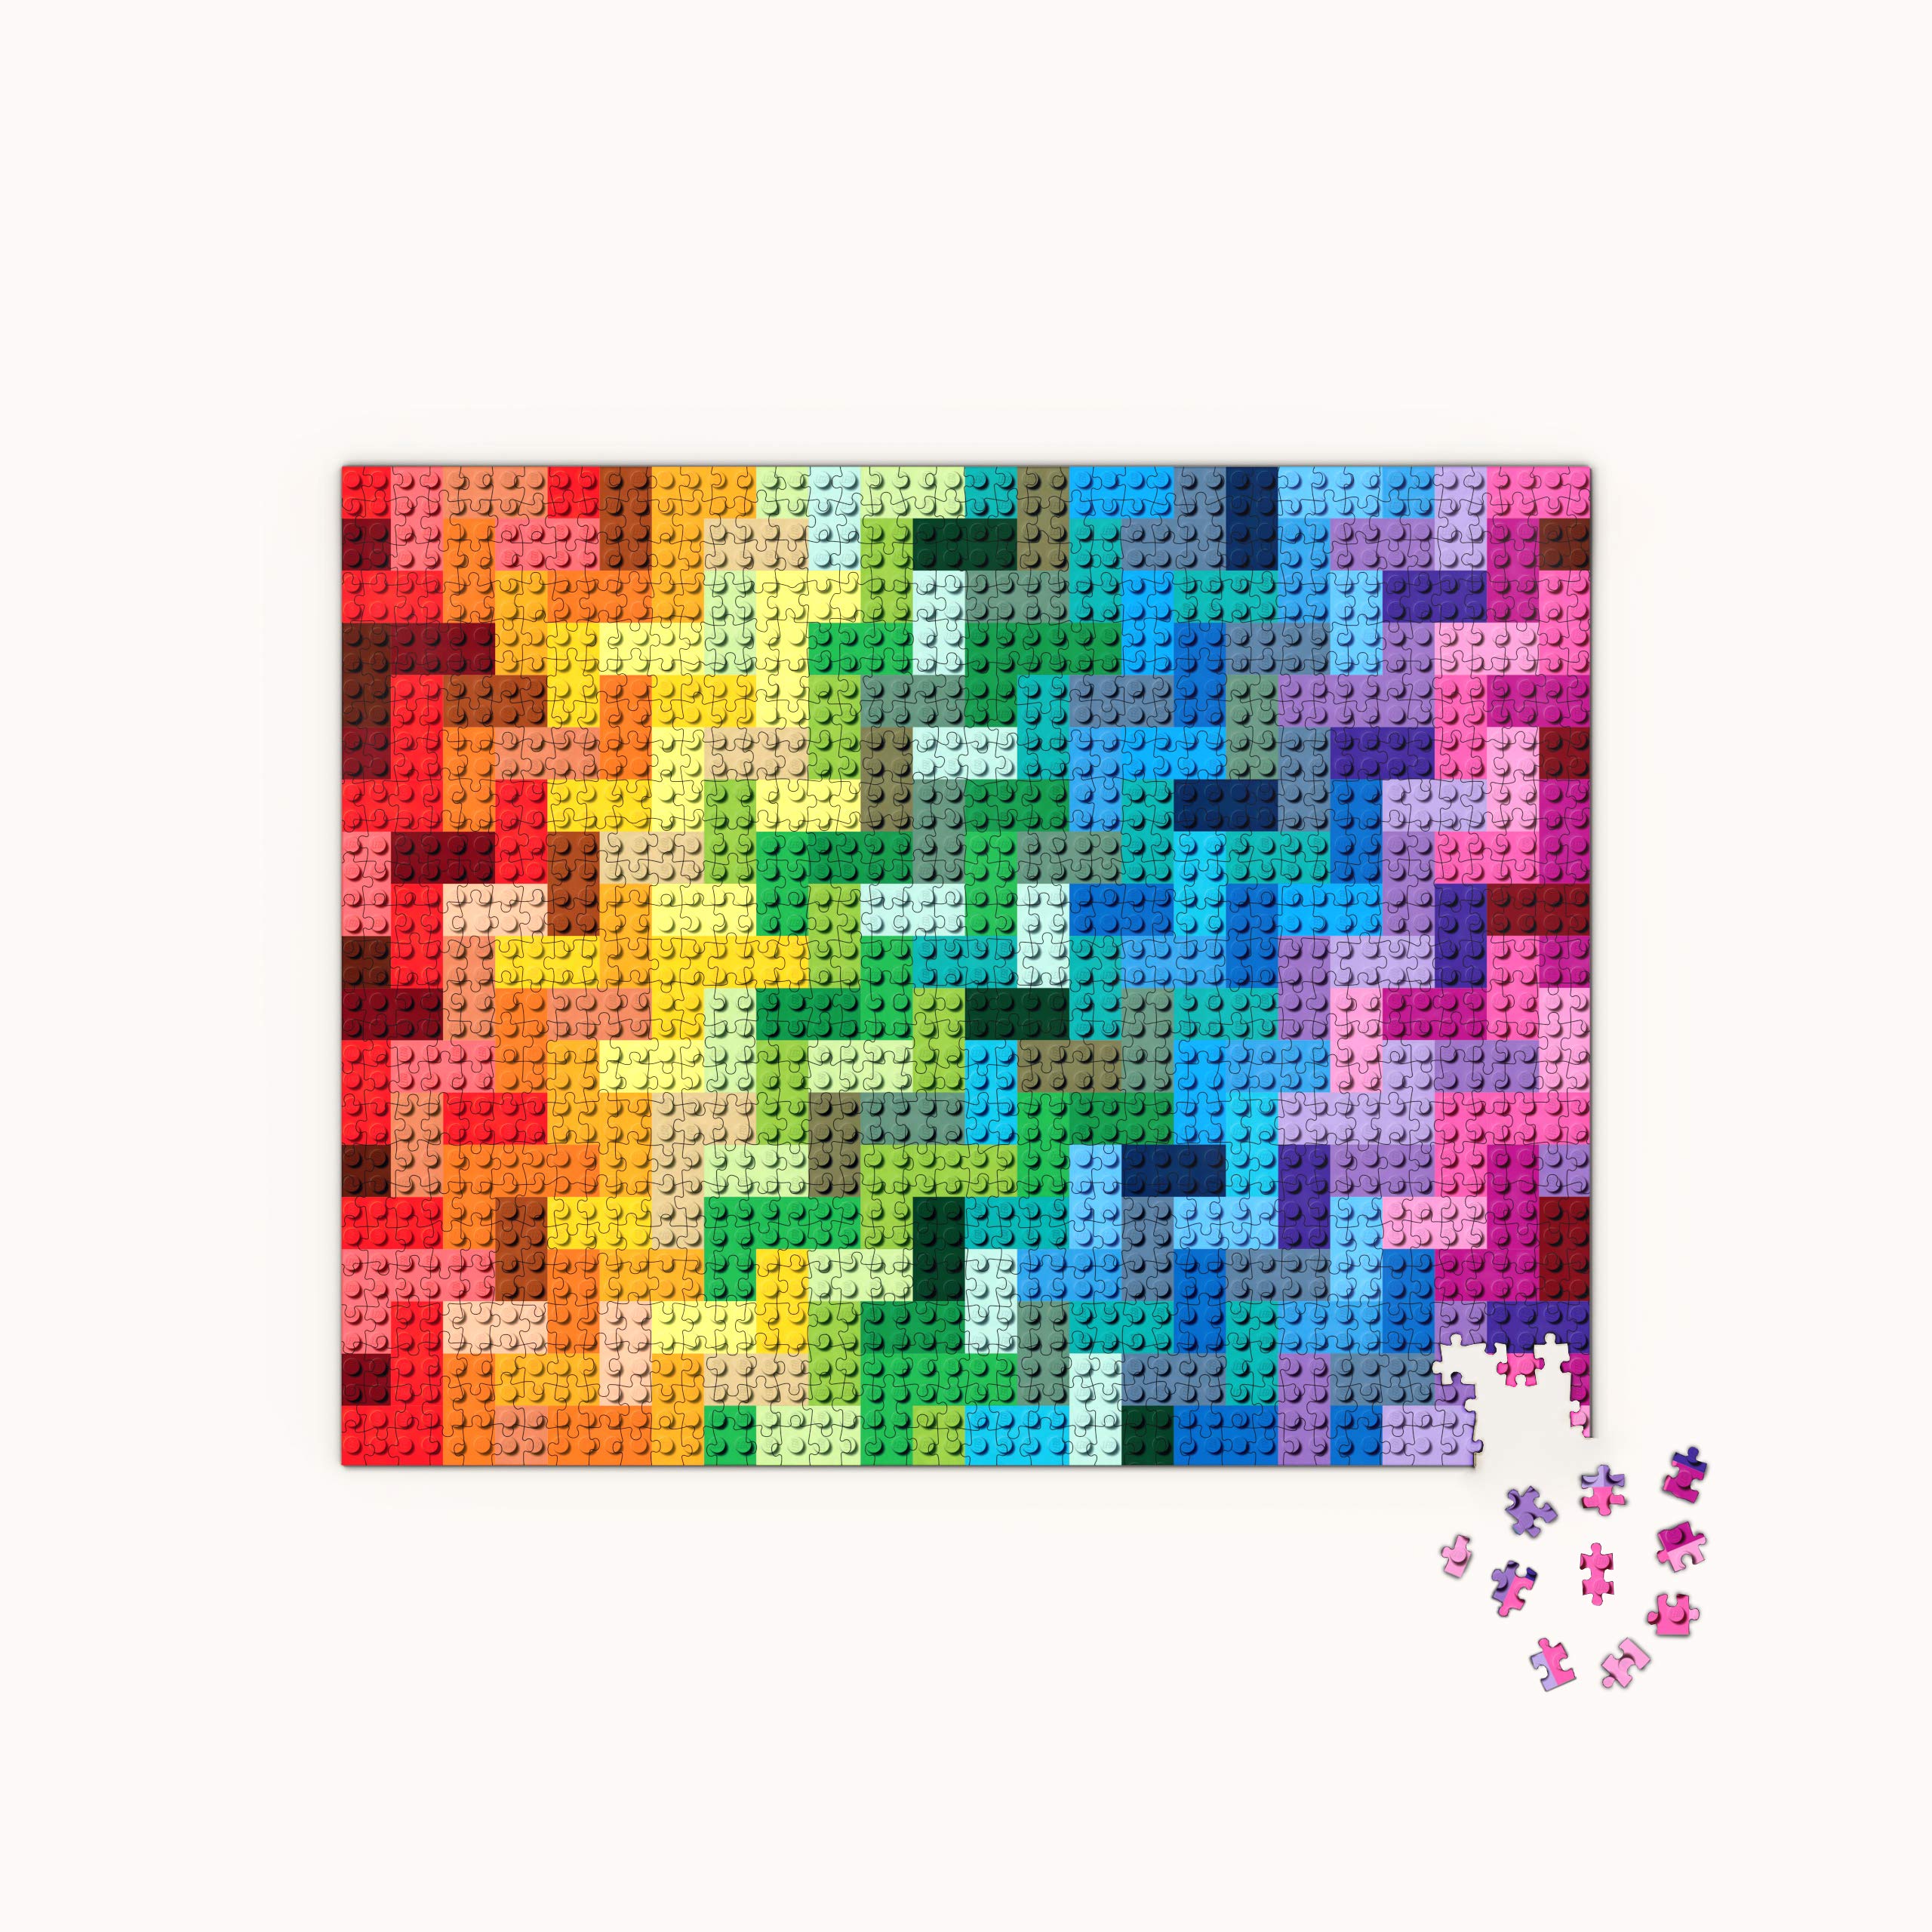 lego rainbow bricks puzzle